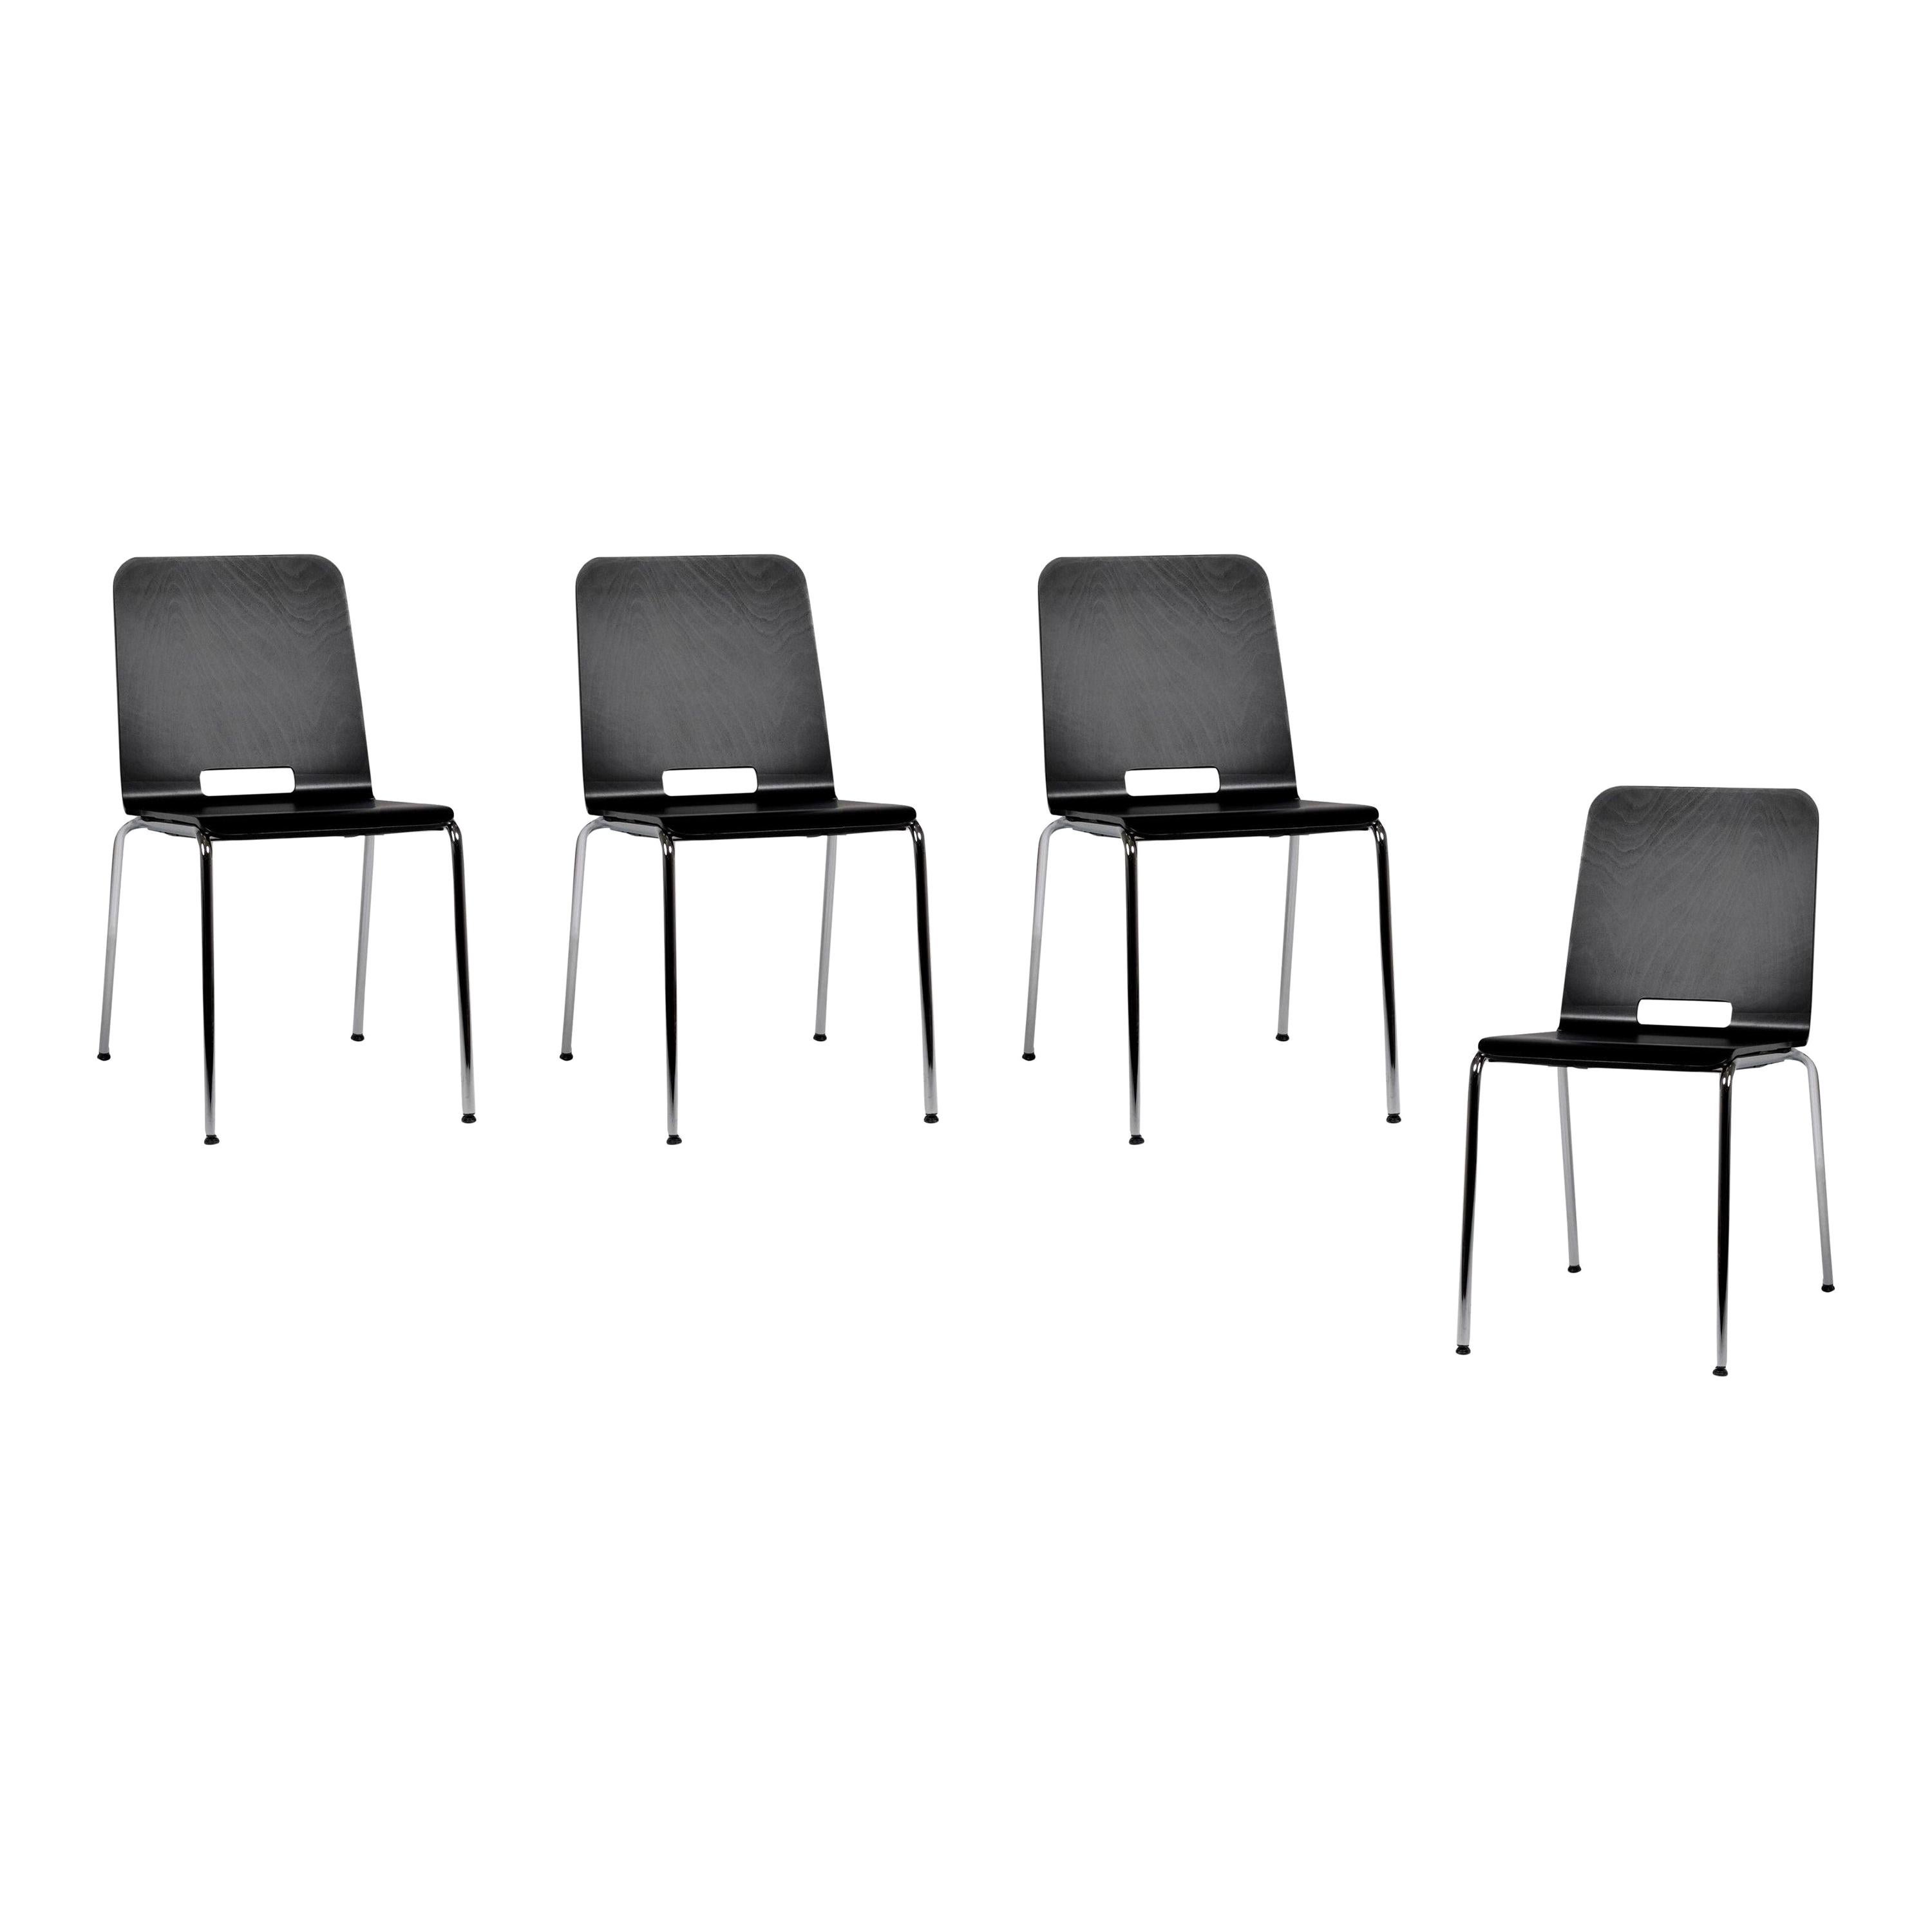 4-Set Dietiker Alta Modern Dining Chair, Designed by Greutmann Bolzern, in Stock